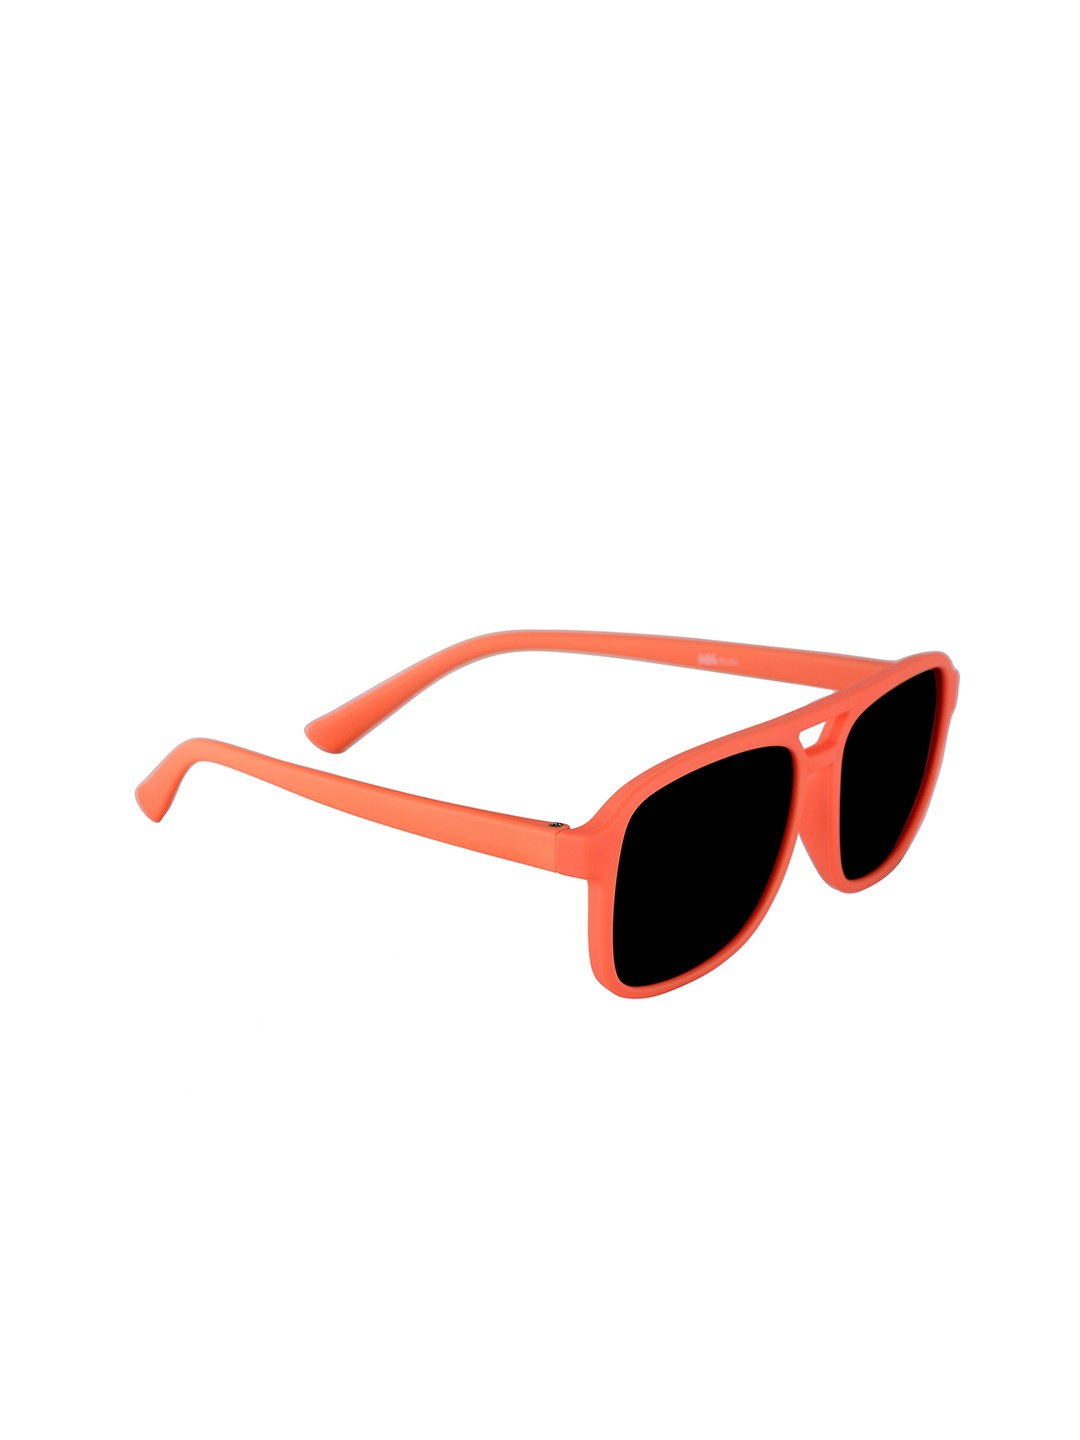 

Kool Kidz Unisex Kids Round Sunglasses with Polarised and UV Protected Lens, Black